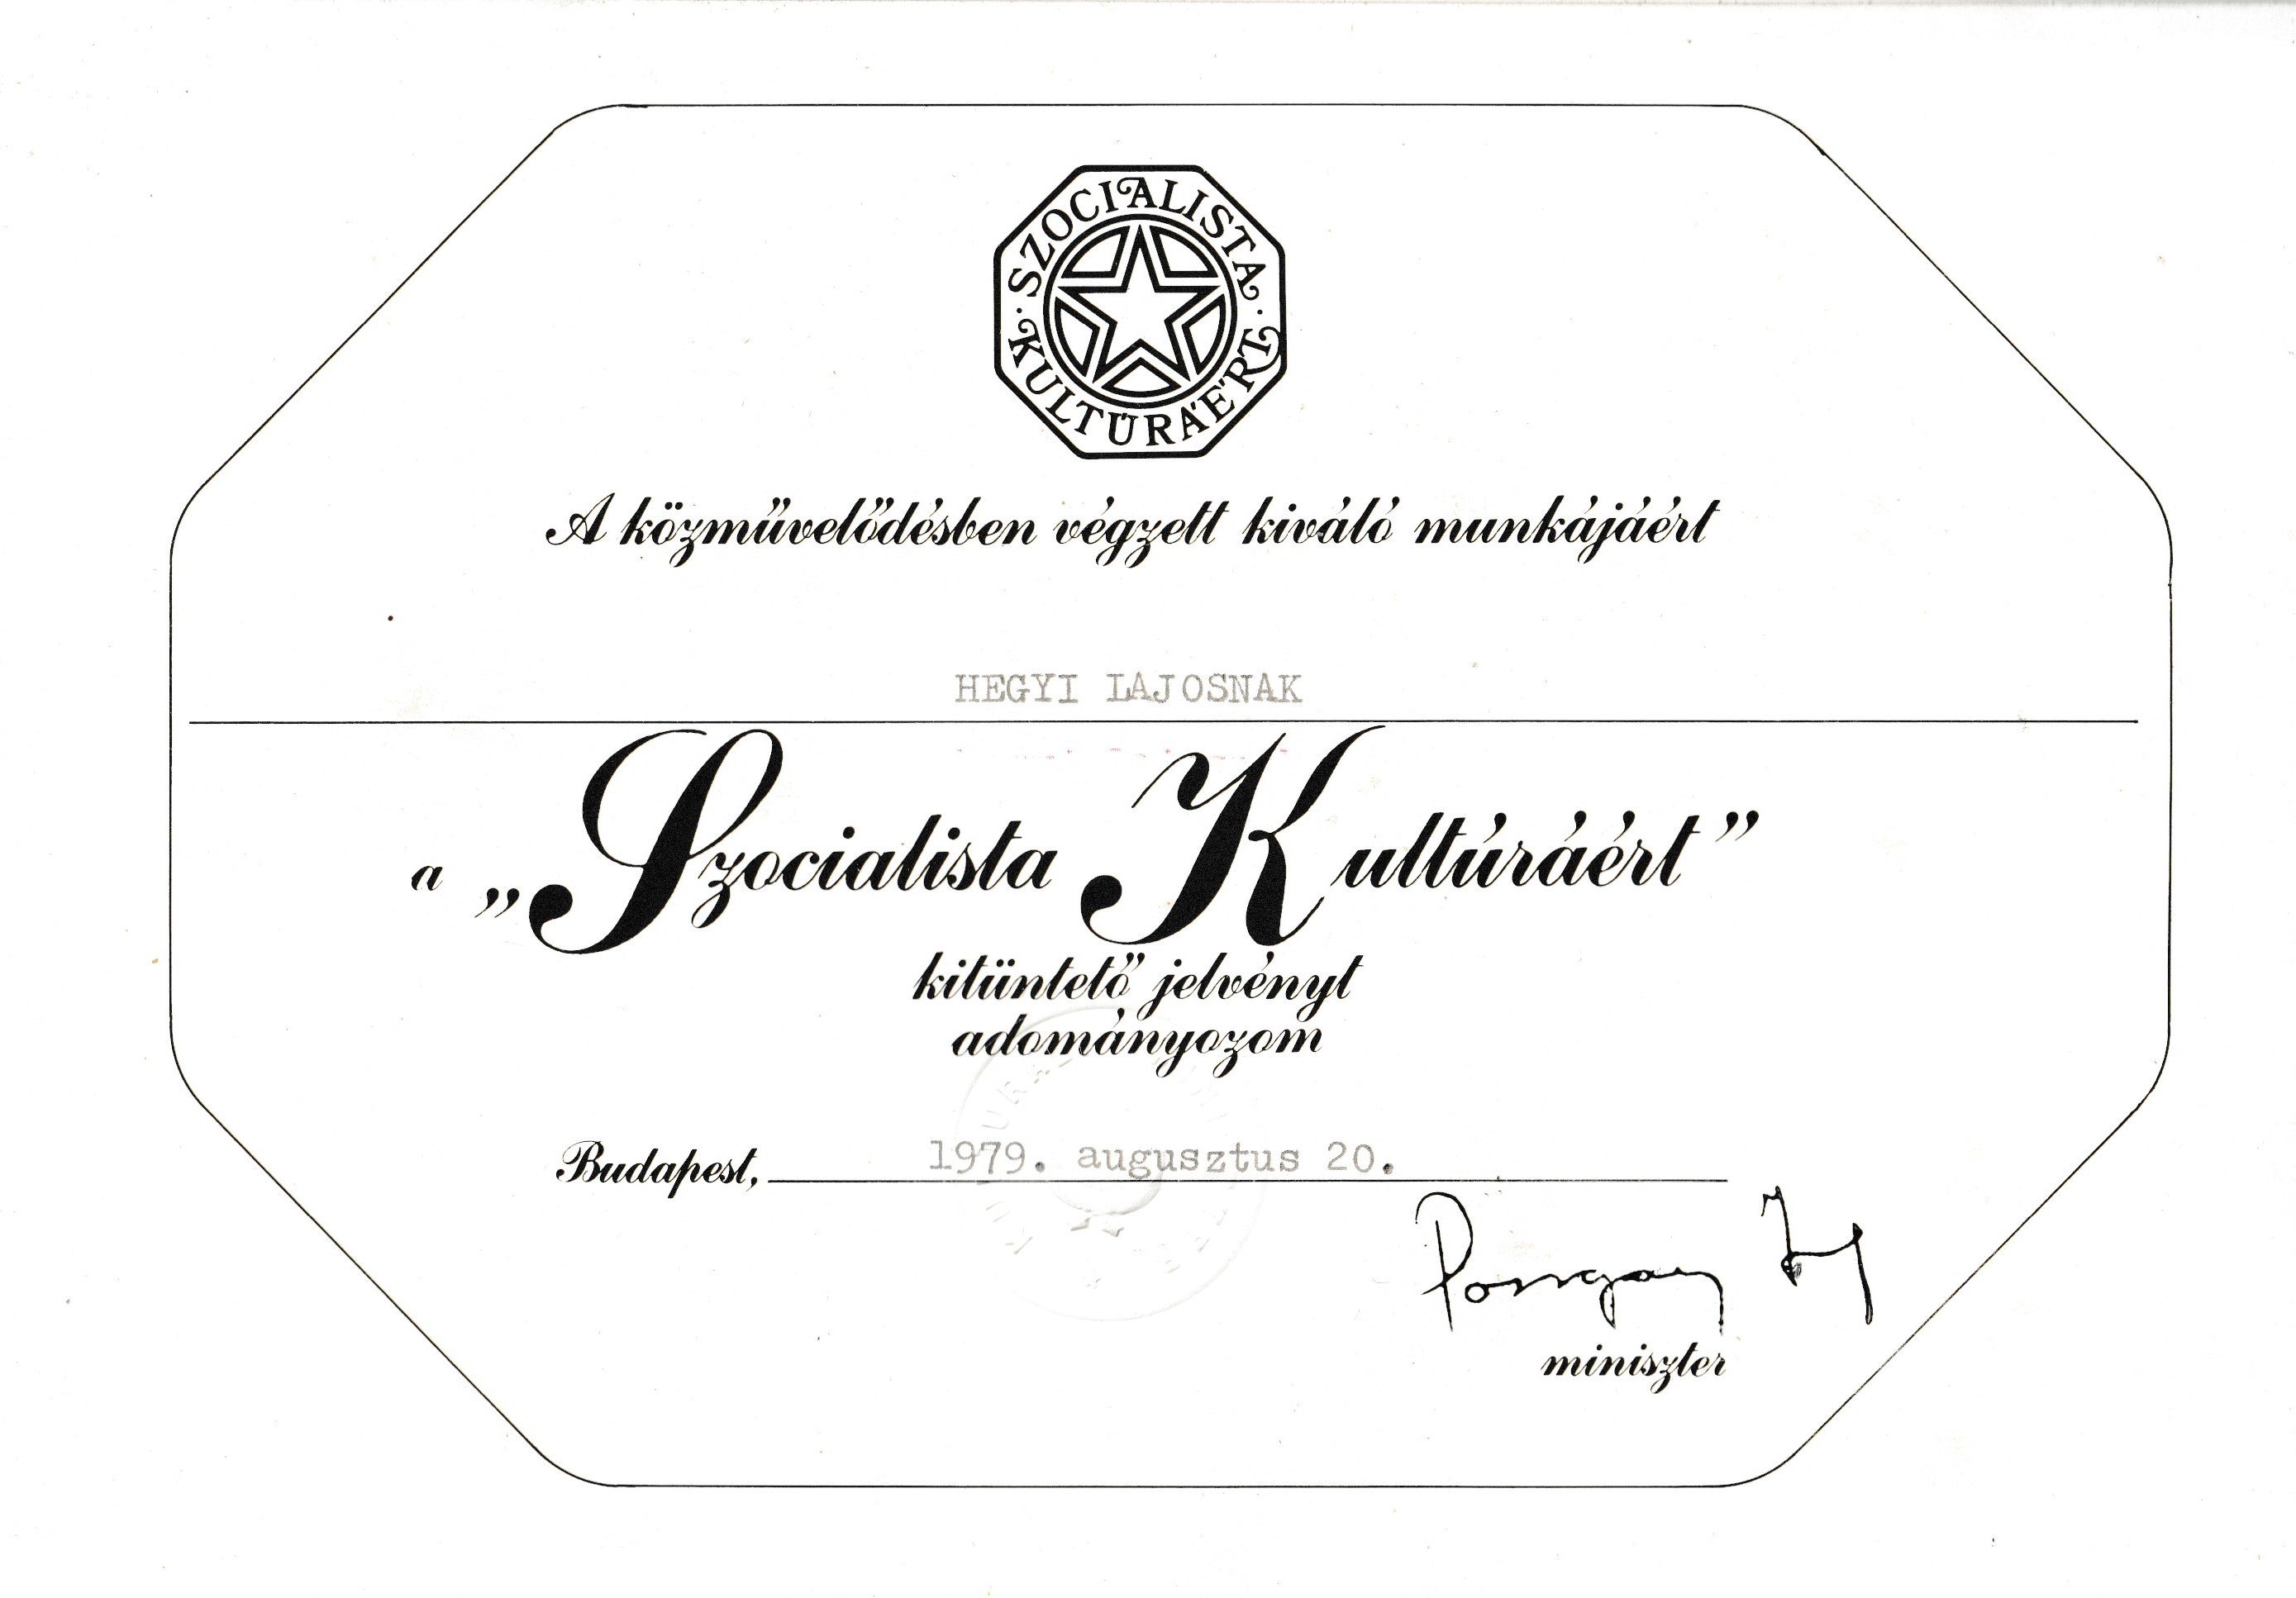 Szocialista kultúráért kitüntető jelvény adományozó oklevele (Tapolcai Városi Múzeum CC BY-NC-SA)